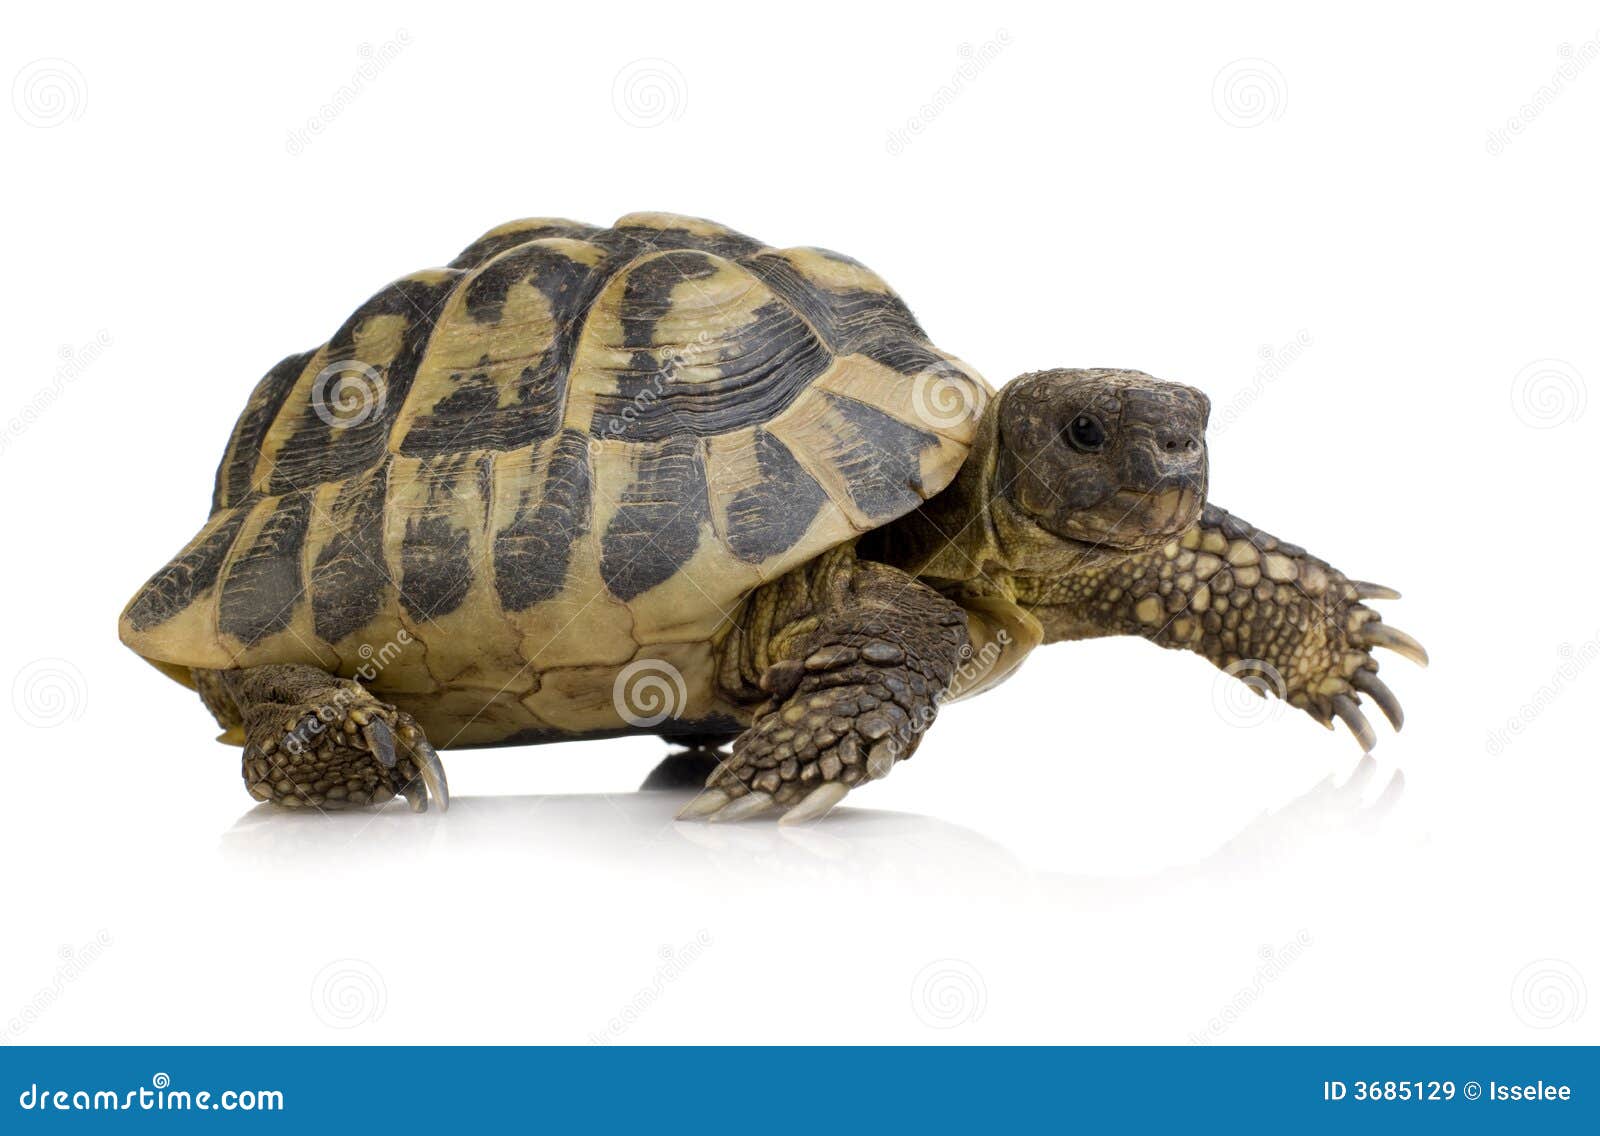 herman's tortoise - testudo hermanni